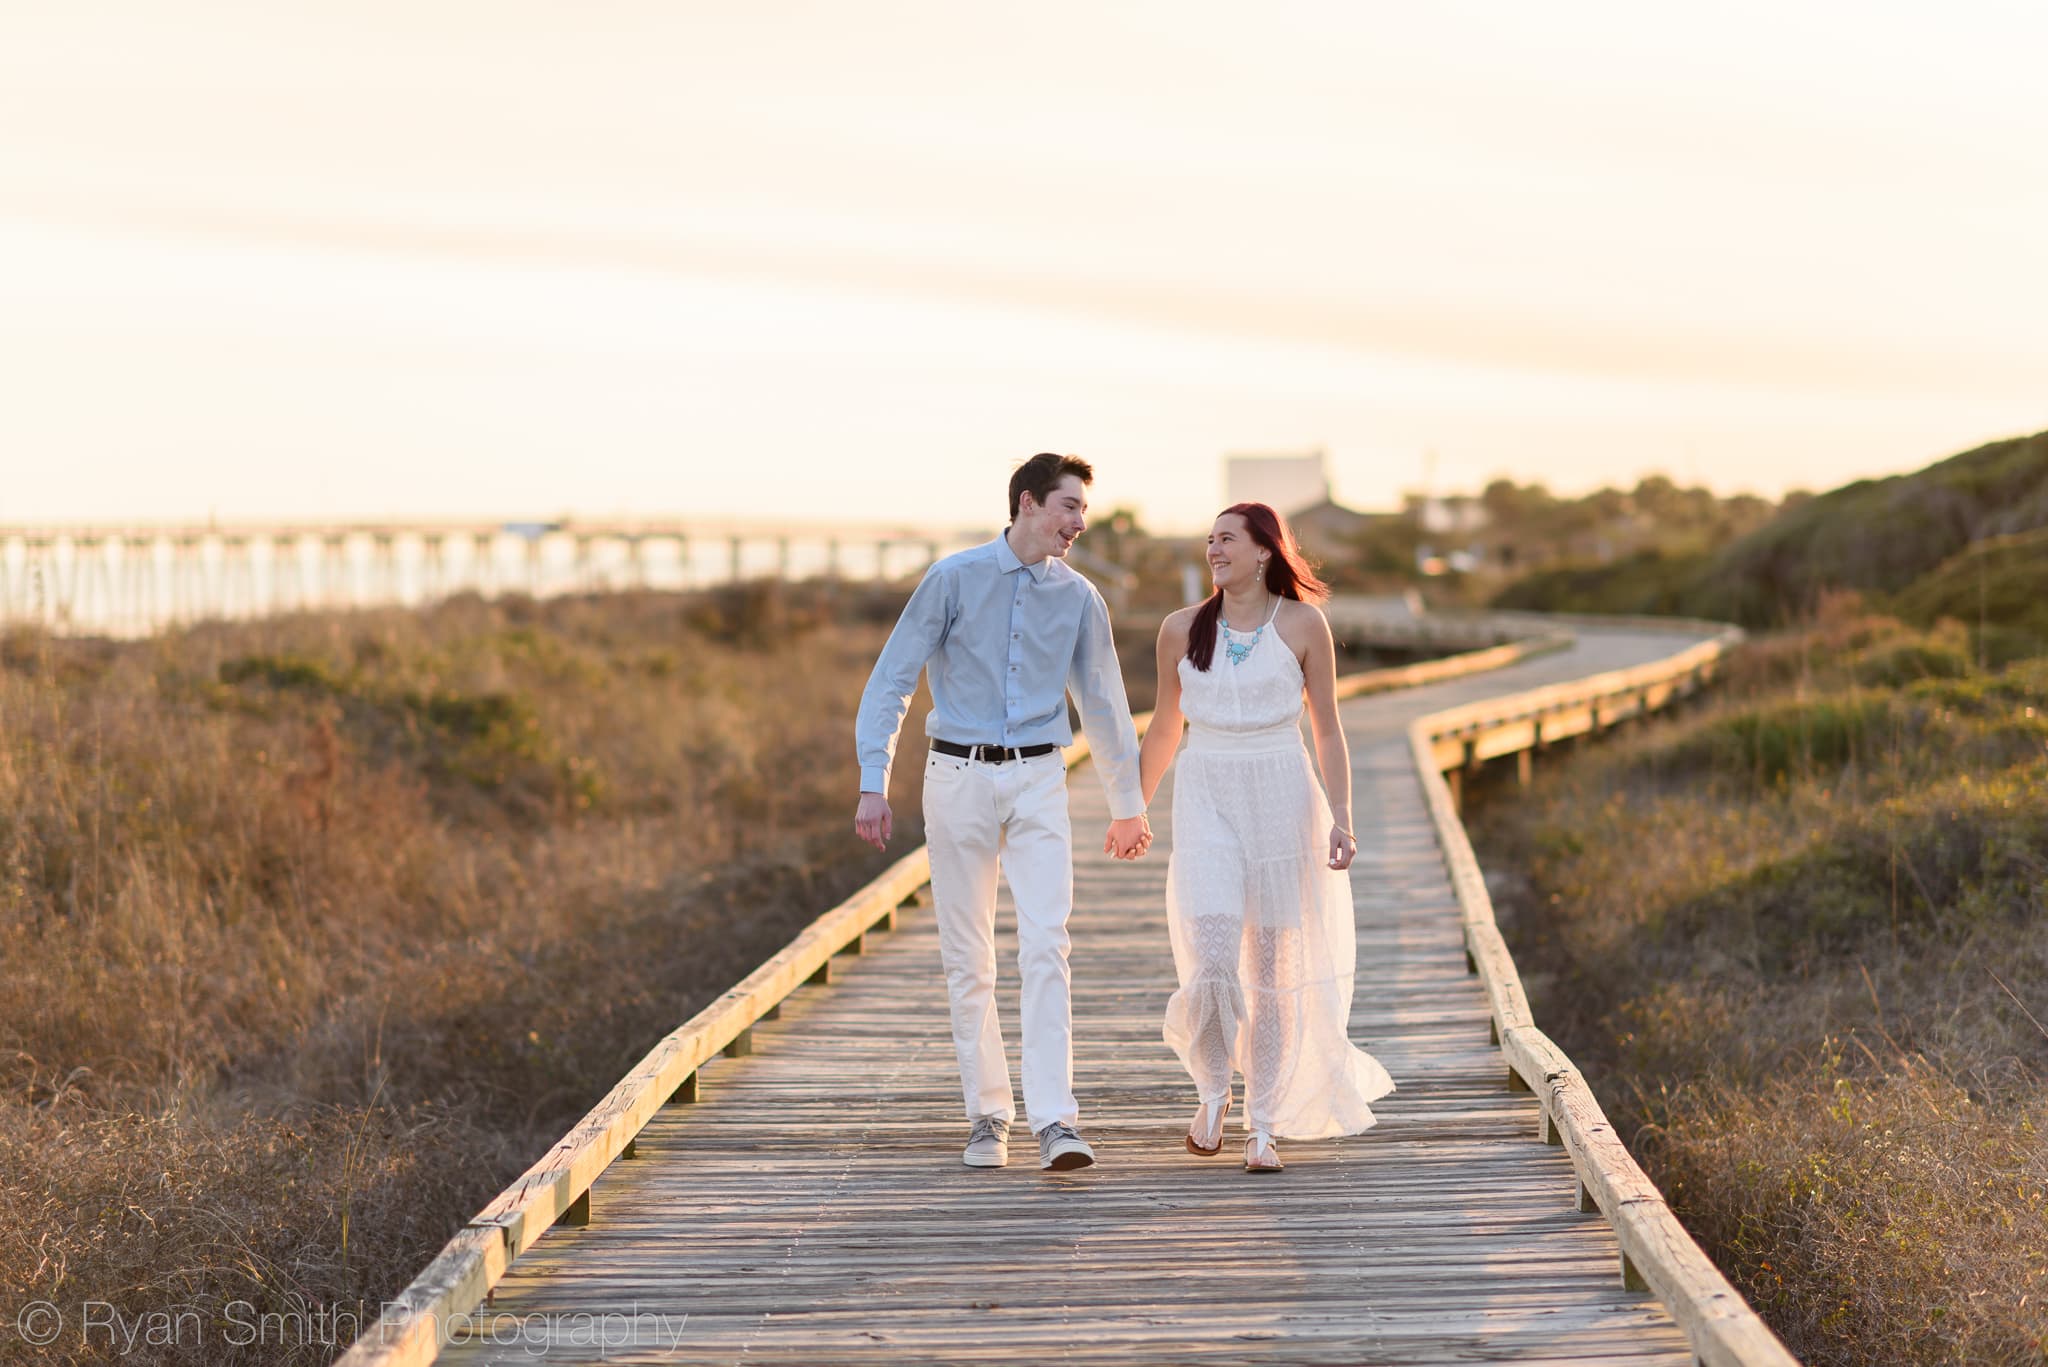 Holding hands walking down the boardwalk together - Myrtle Beach State Park